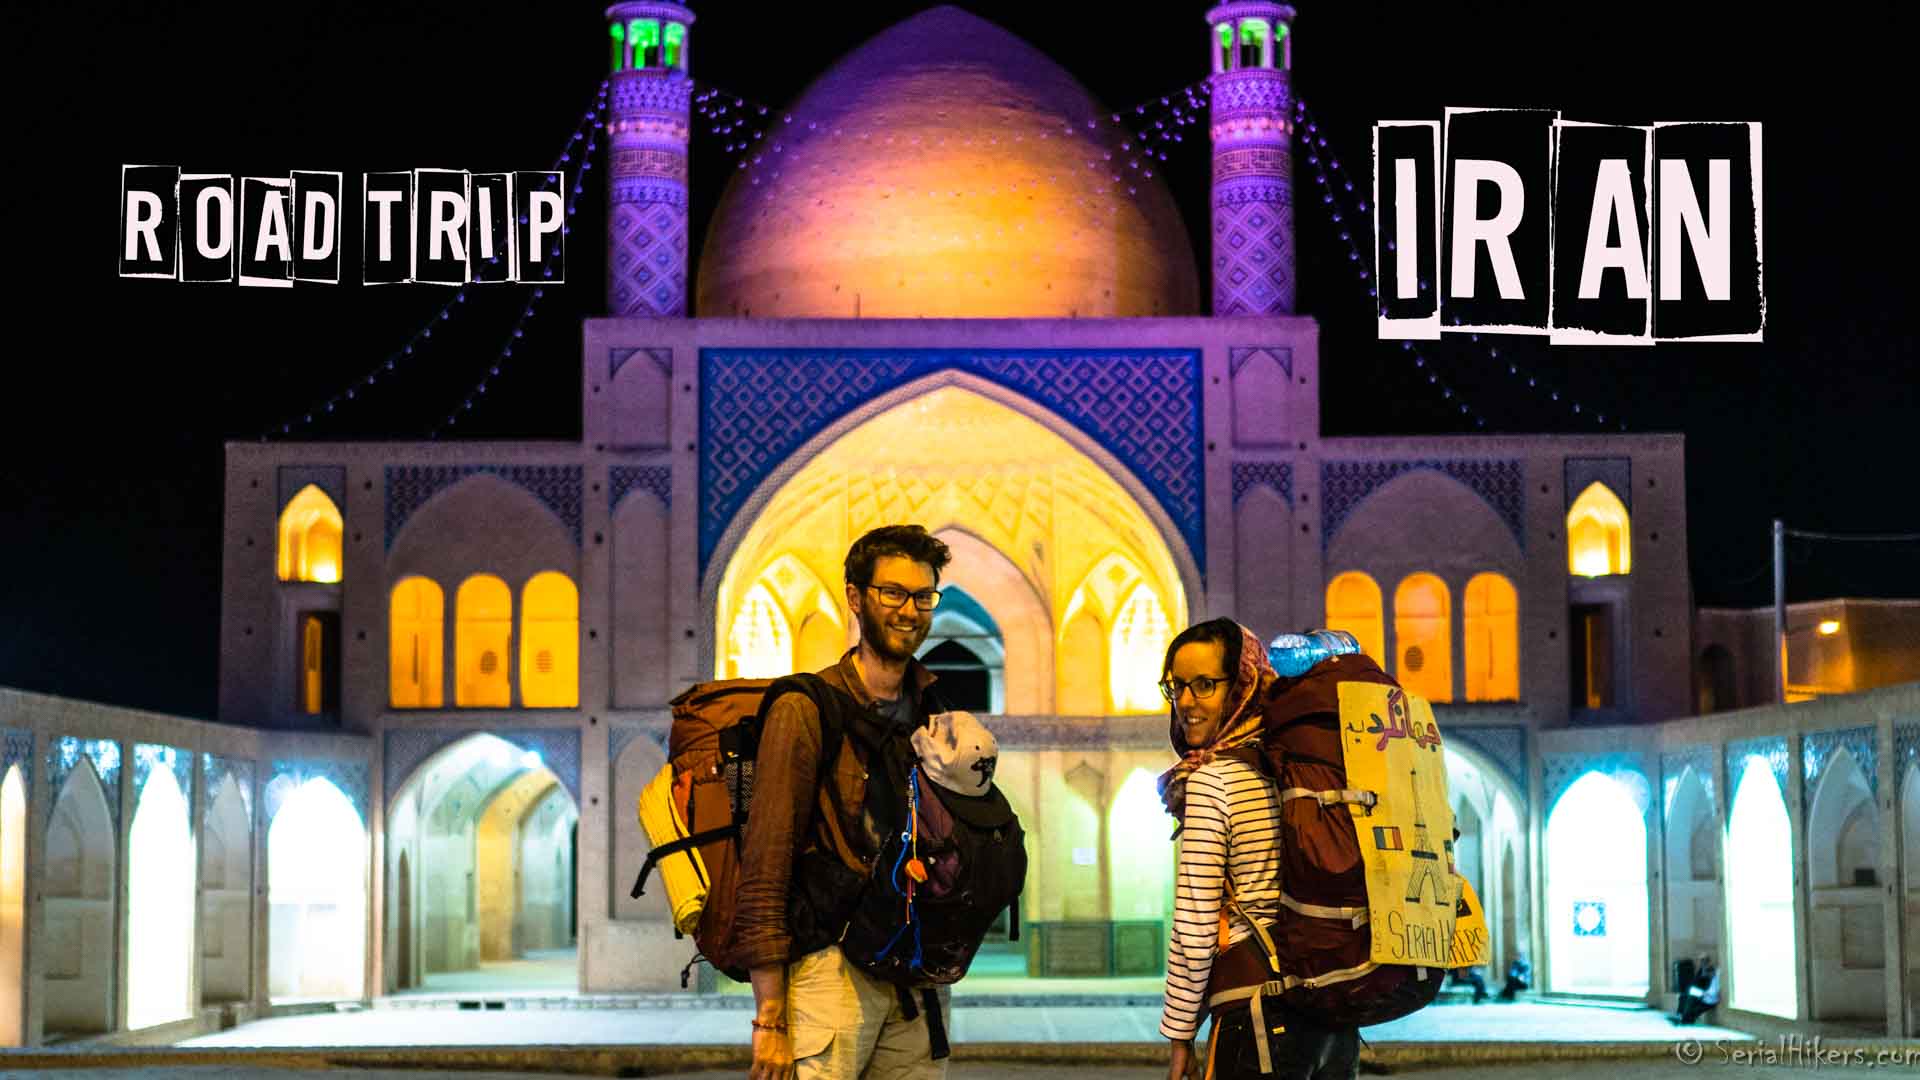 SerialHikers stop autostop world monde tour hitchhiking aventure adventure alternative travel voyage sans avion no fly newsletter Kachan Iran